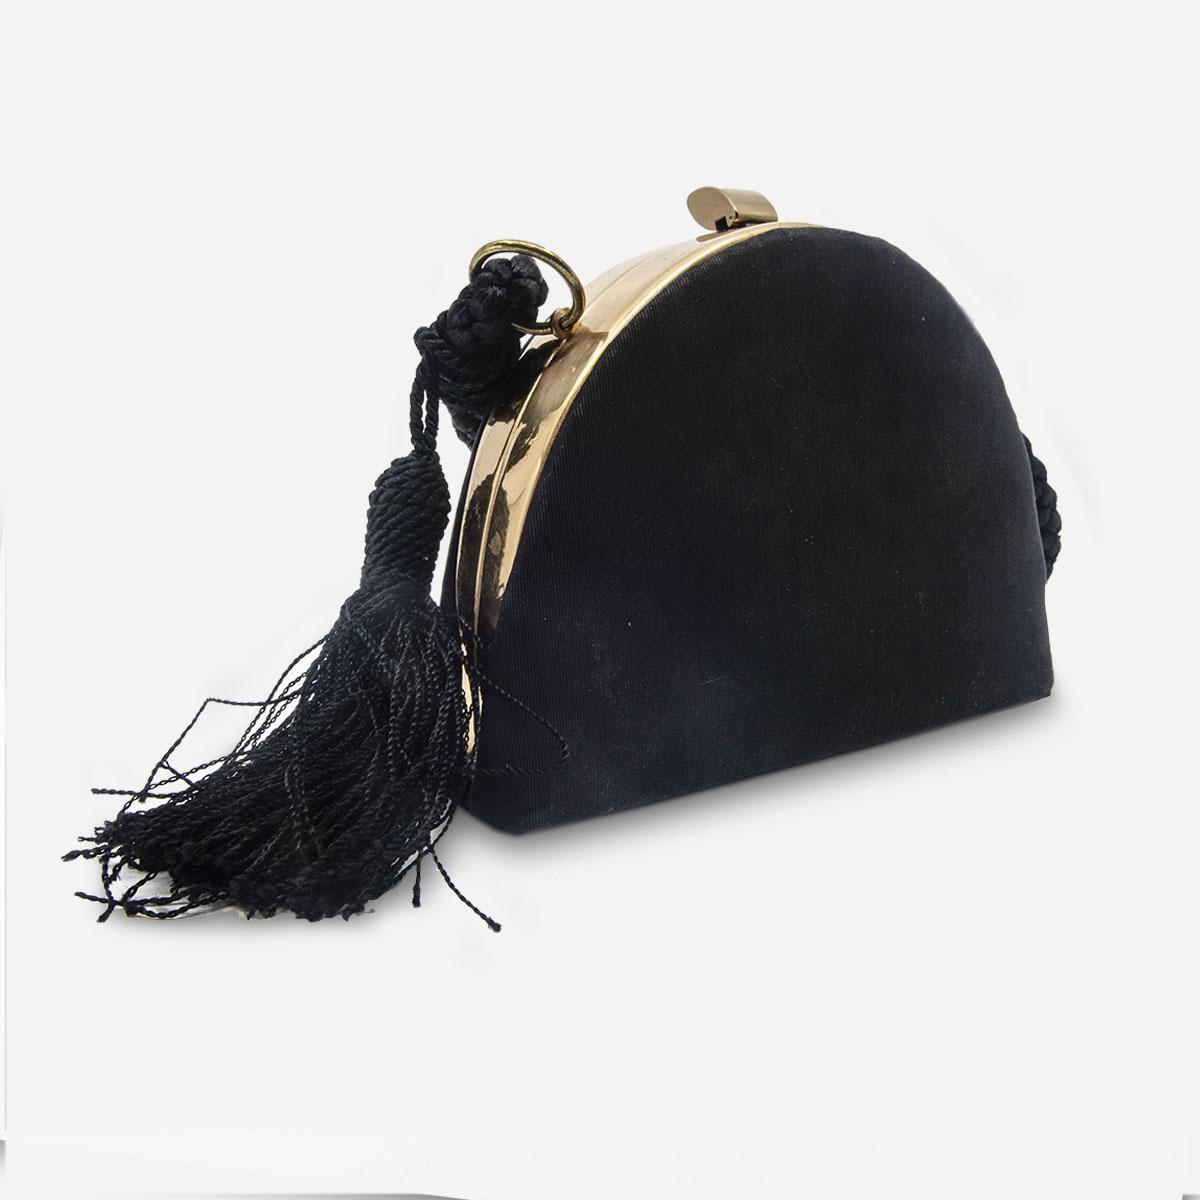 rose gold and black handbag